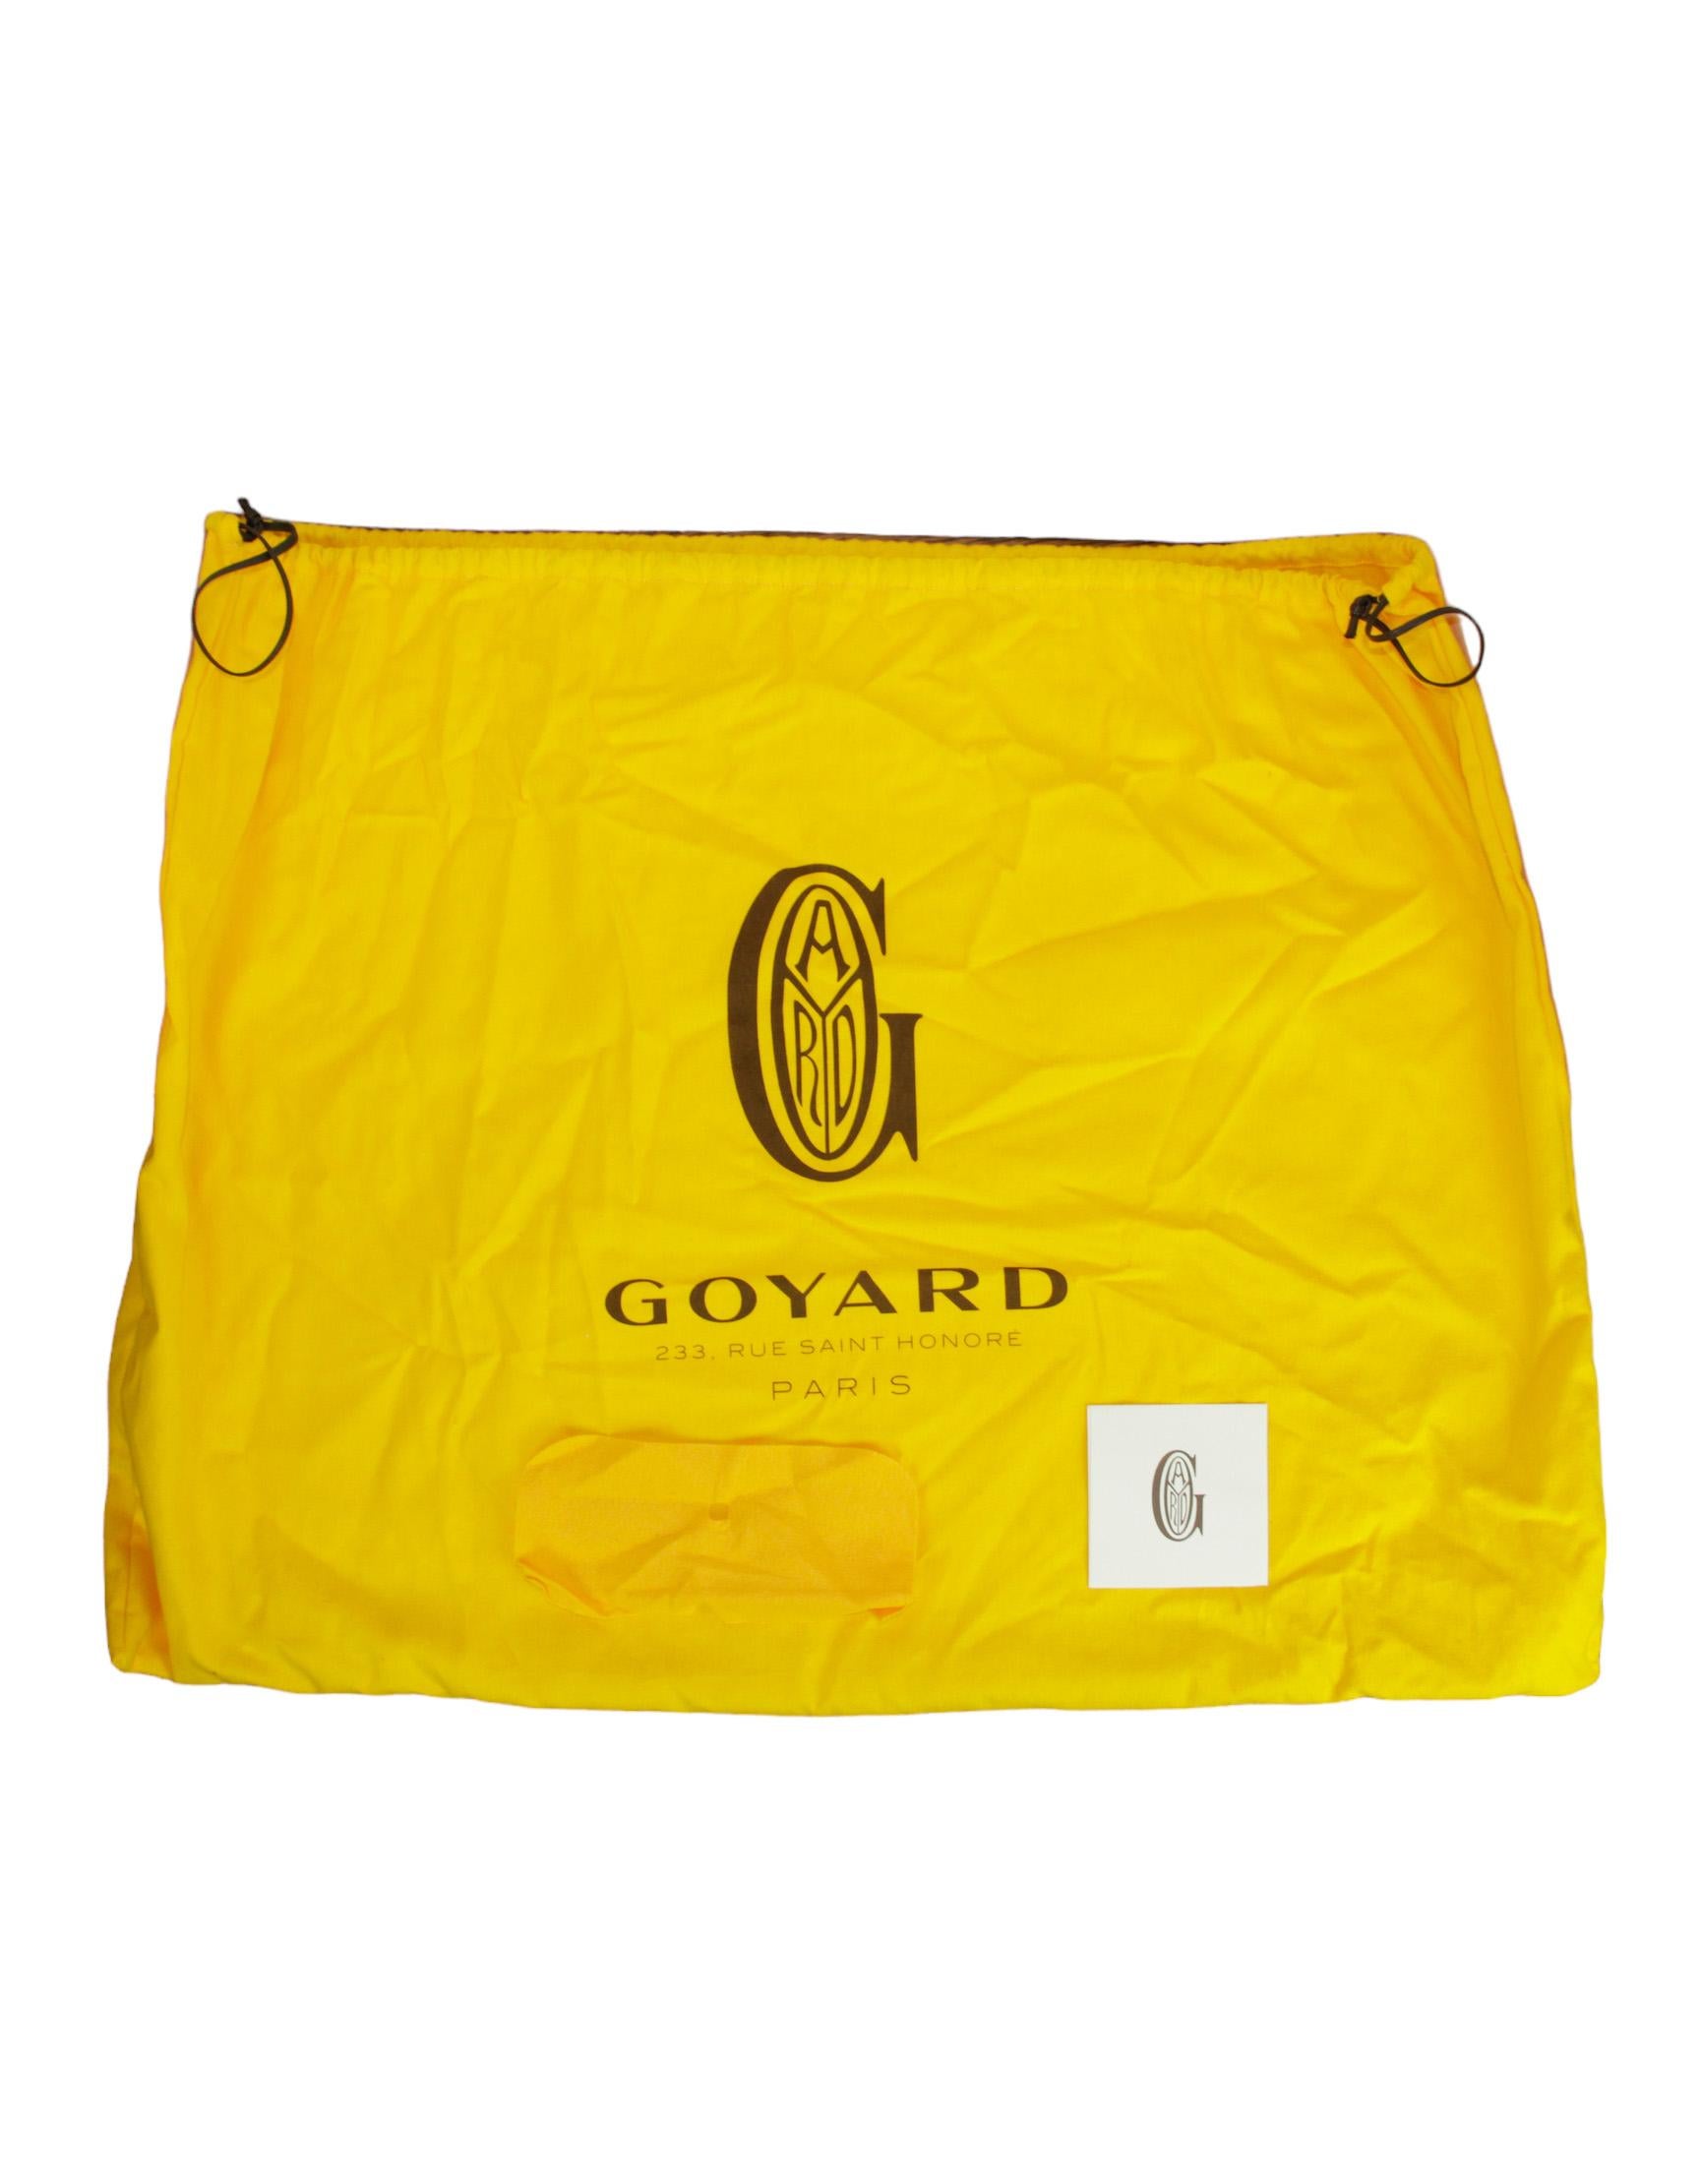 Goyard Orange Canvas/ Leather Goyardine Reversible Anjou GM Tote Bag For Sale 6